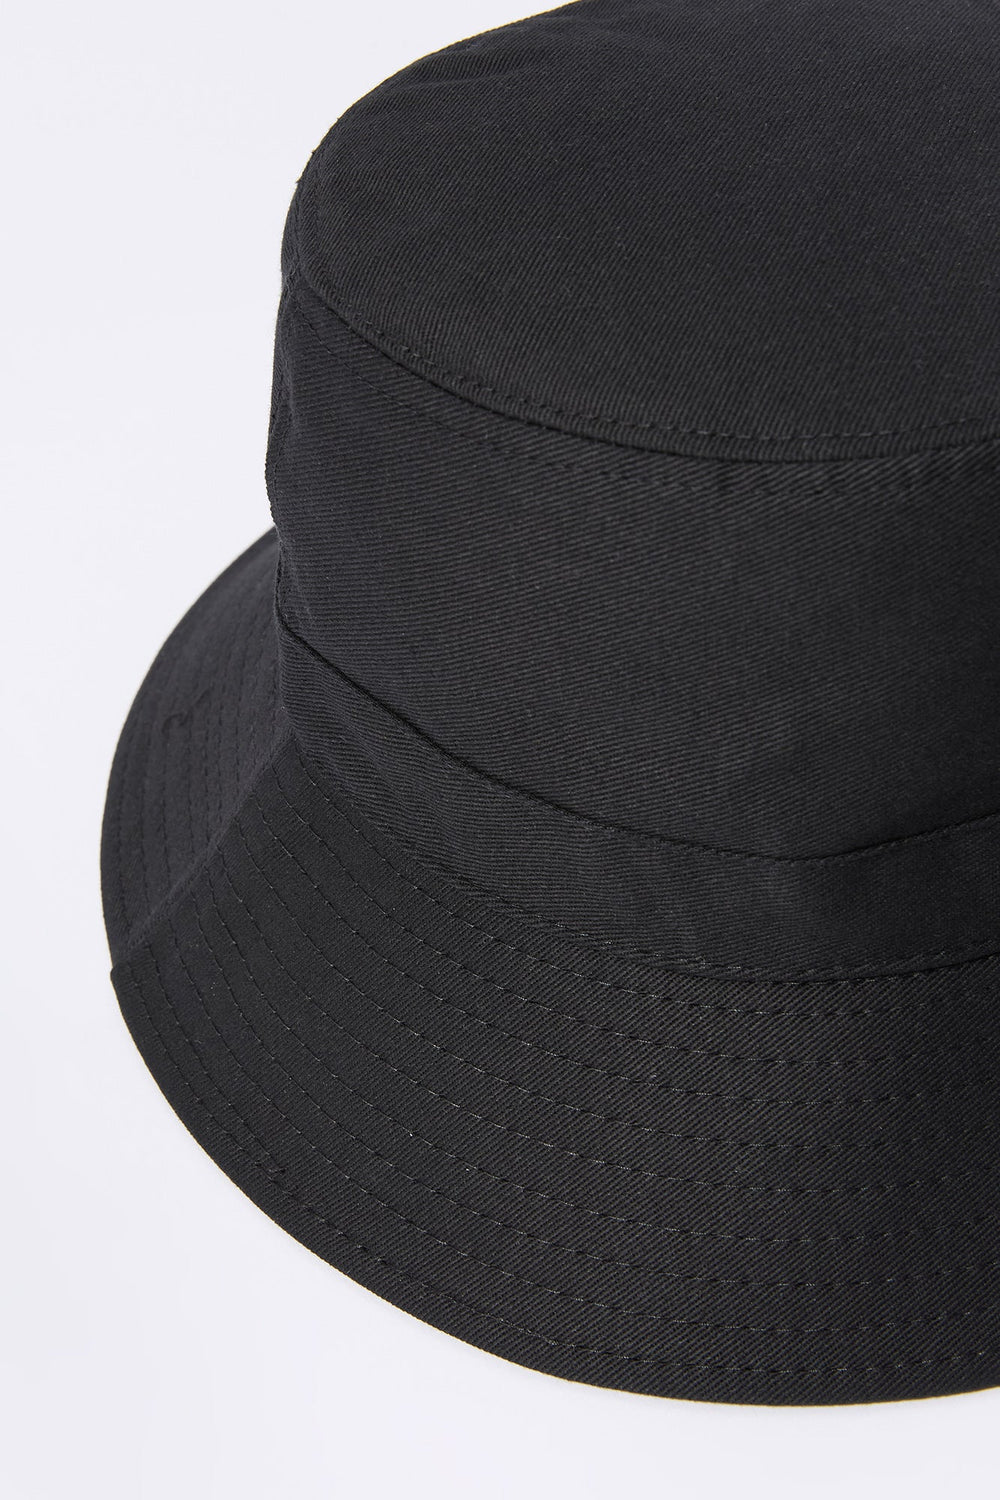 Black Bucket Hat Black Bucket Hat 2